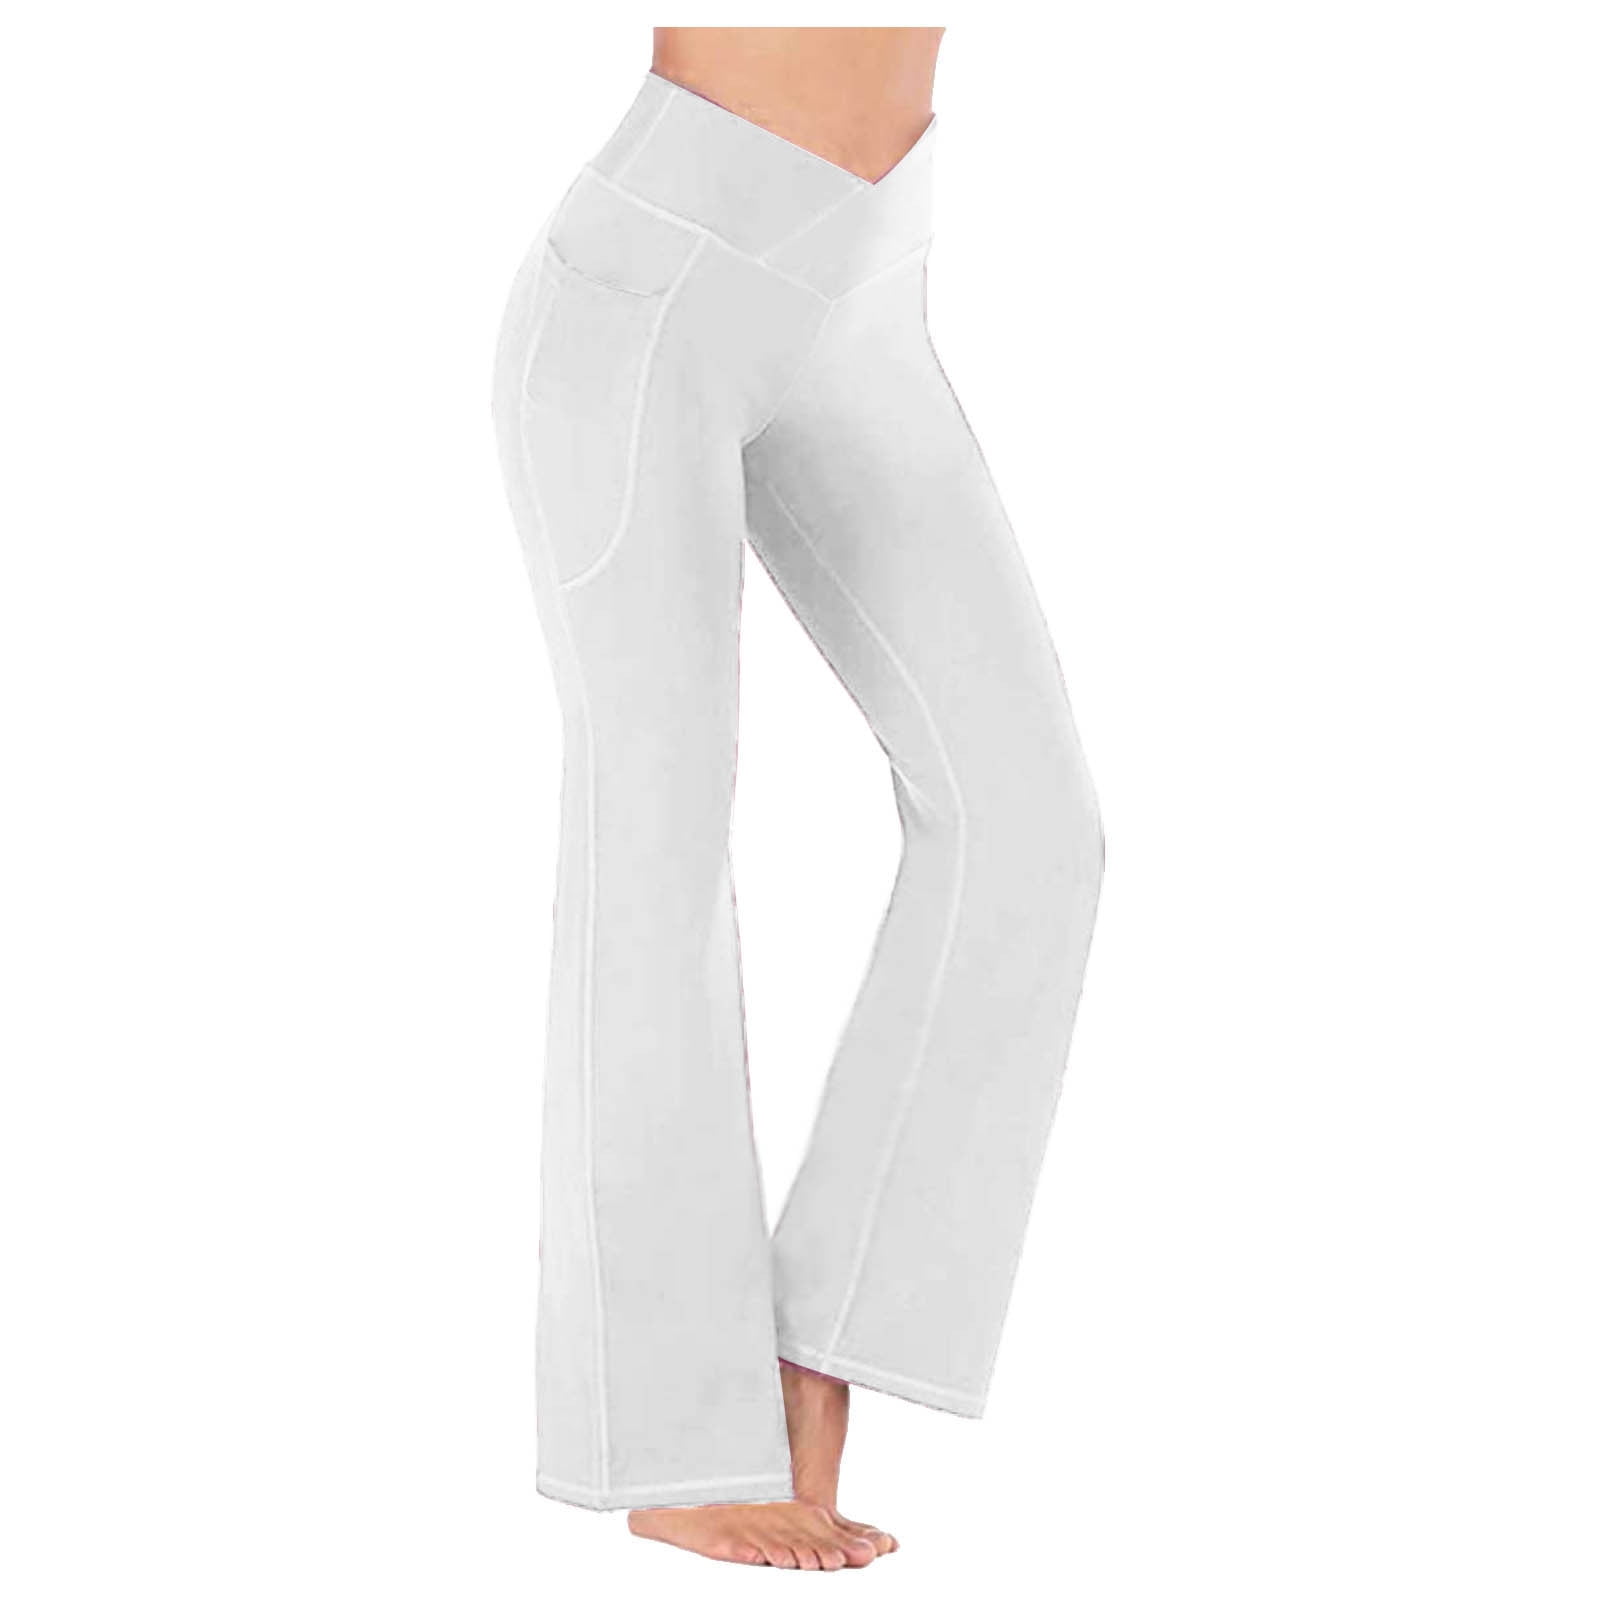 Olyvenn Thin Yoga Pants Physical Fitness Women's Plus Skinny Slim Fit ...